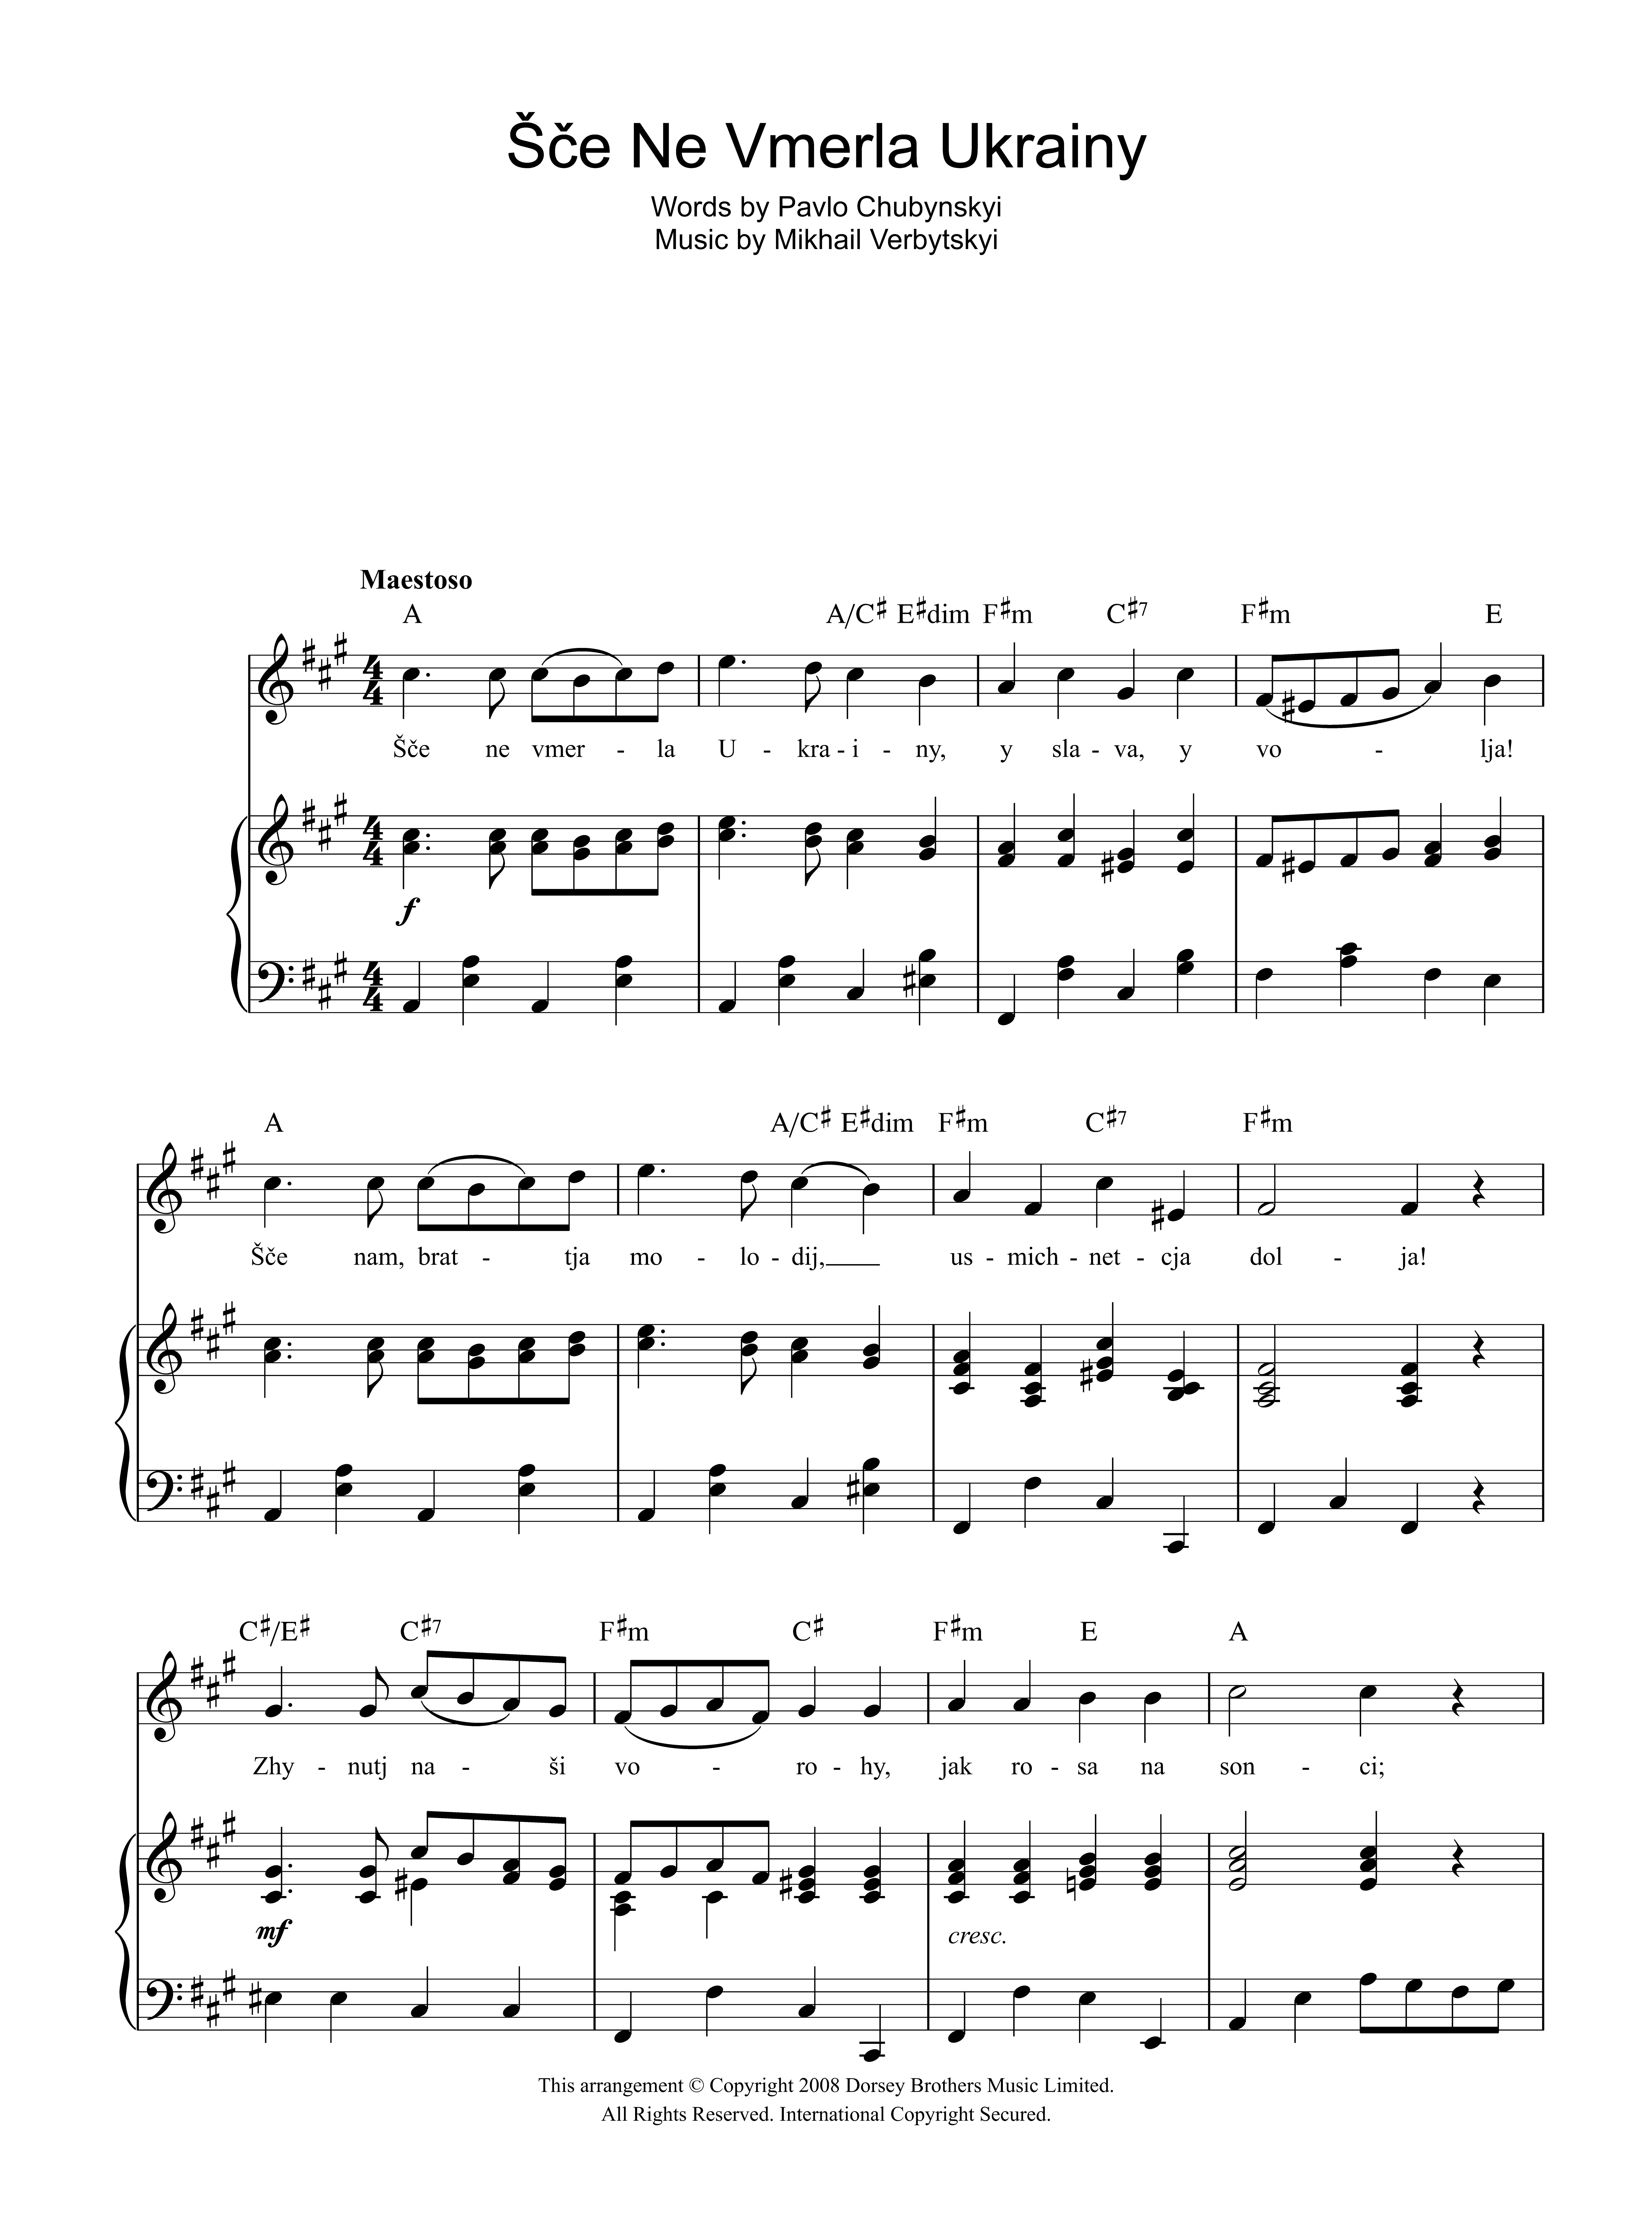 Mikhail Verbytskyi Shche Ne Vmerla Ukraina (Ukrainian National Anthem) Sheet Music Notes & Chords for Piano, Vocal & Guitar (Right-Hand Melody) - Download or Print PDF